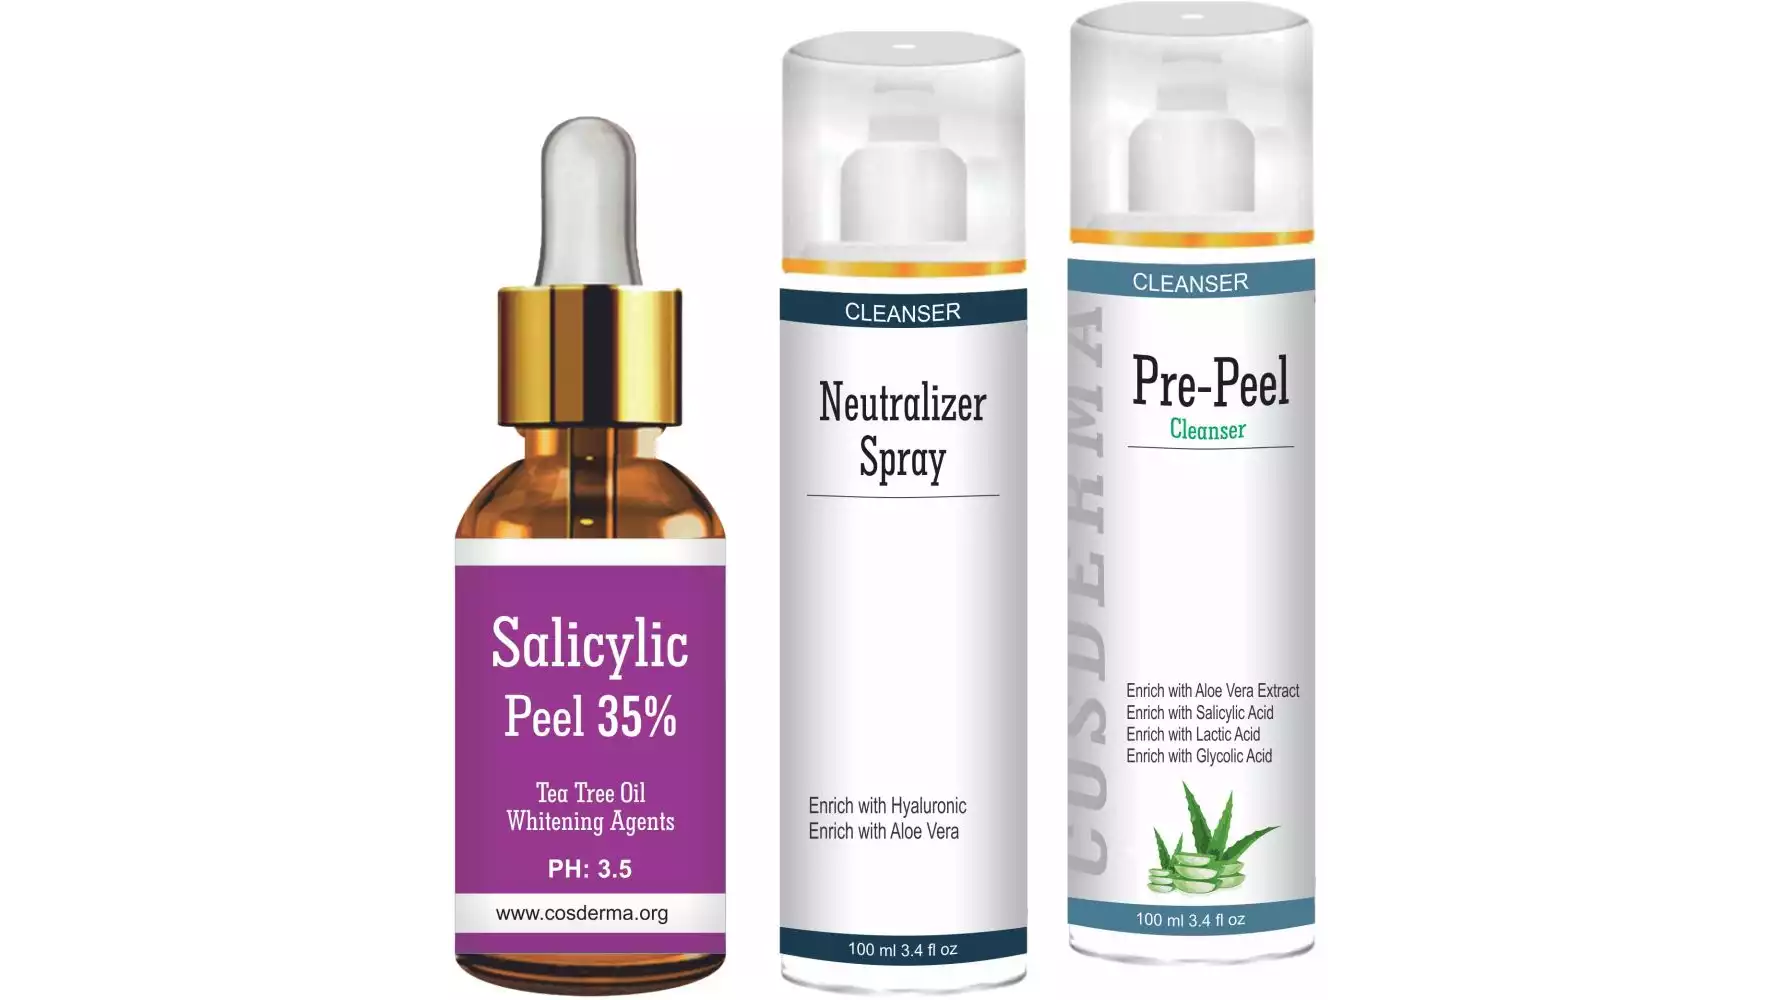 Cosderma Salicylic peel 35%, Neutralizer Spray & Pre Peel Cleanser Combo (1Pack)